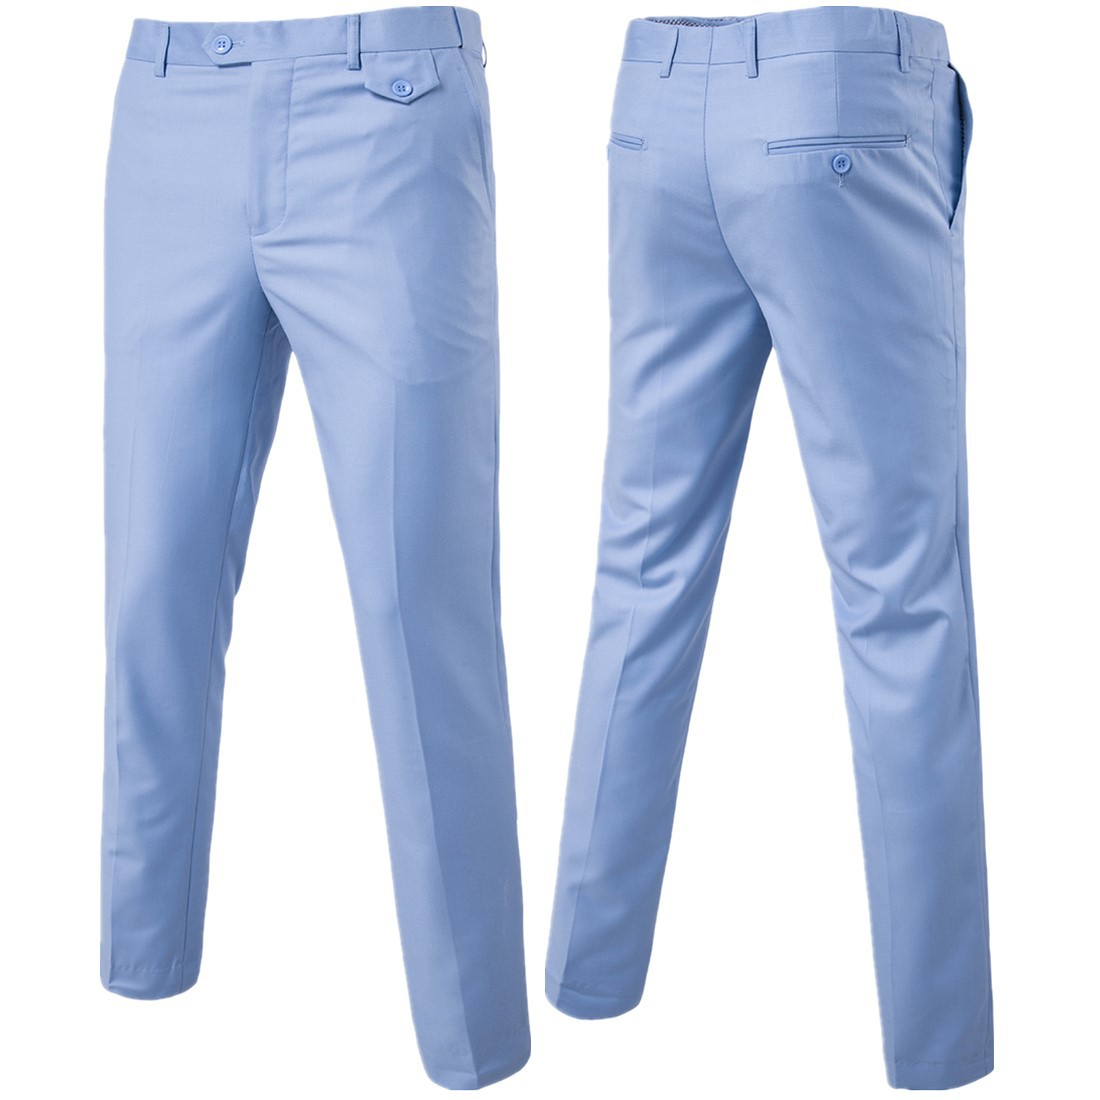  Men Suit Pants Cotton Solid Casual Business Formal Bridegroom Plus Size Wedding Trousers light blue